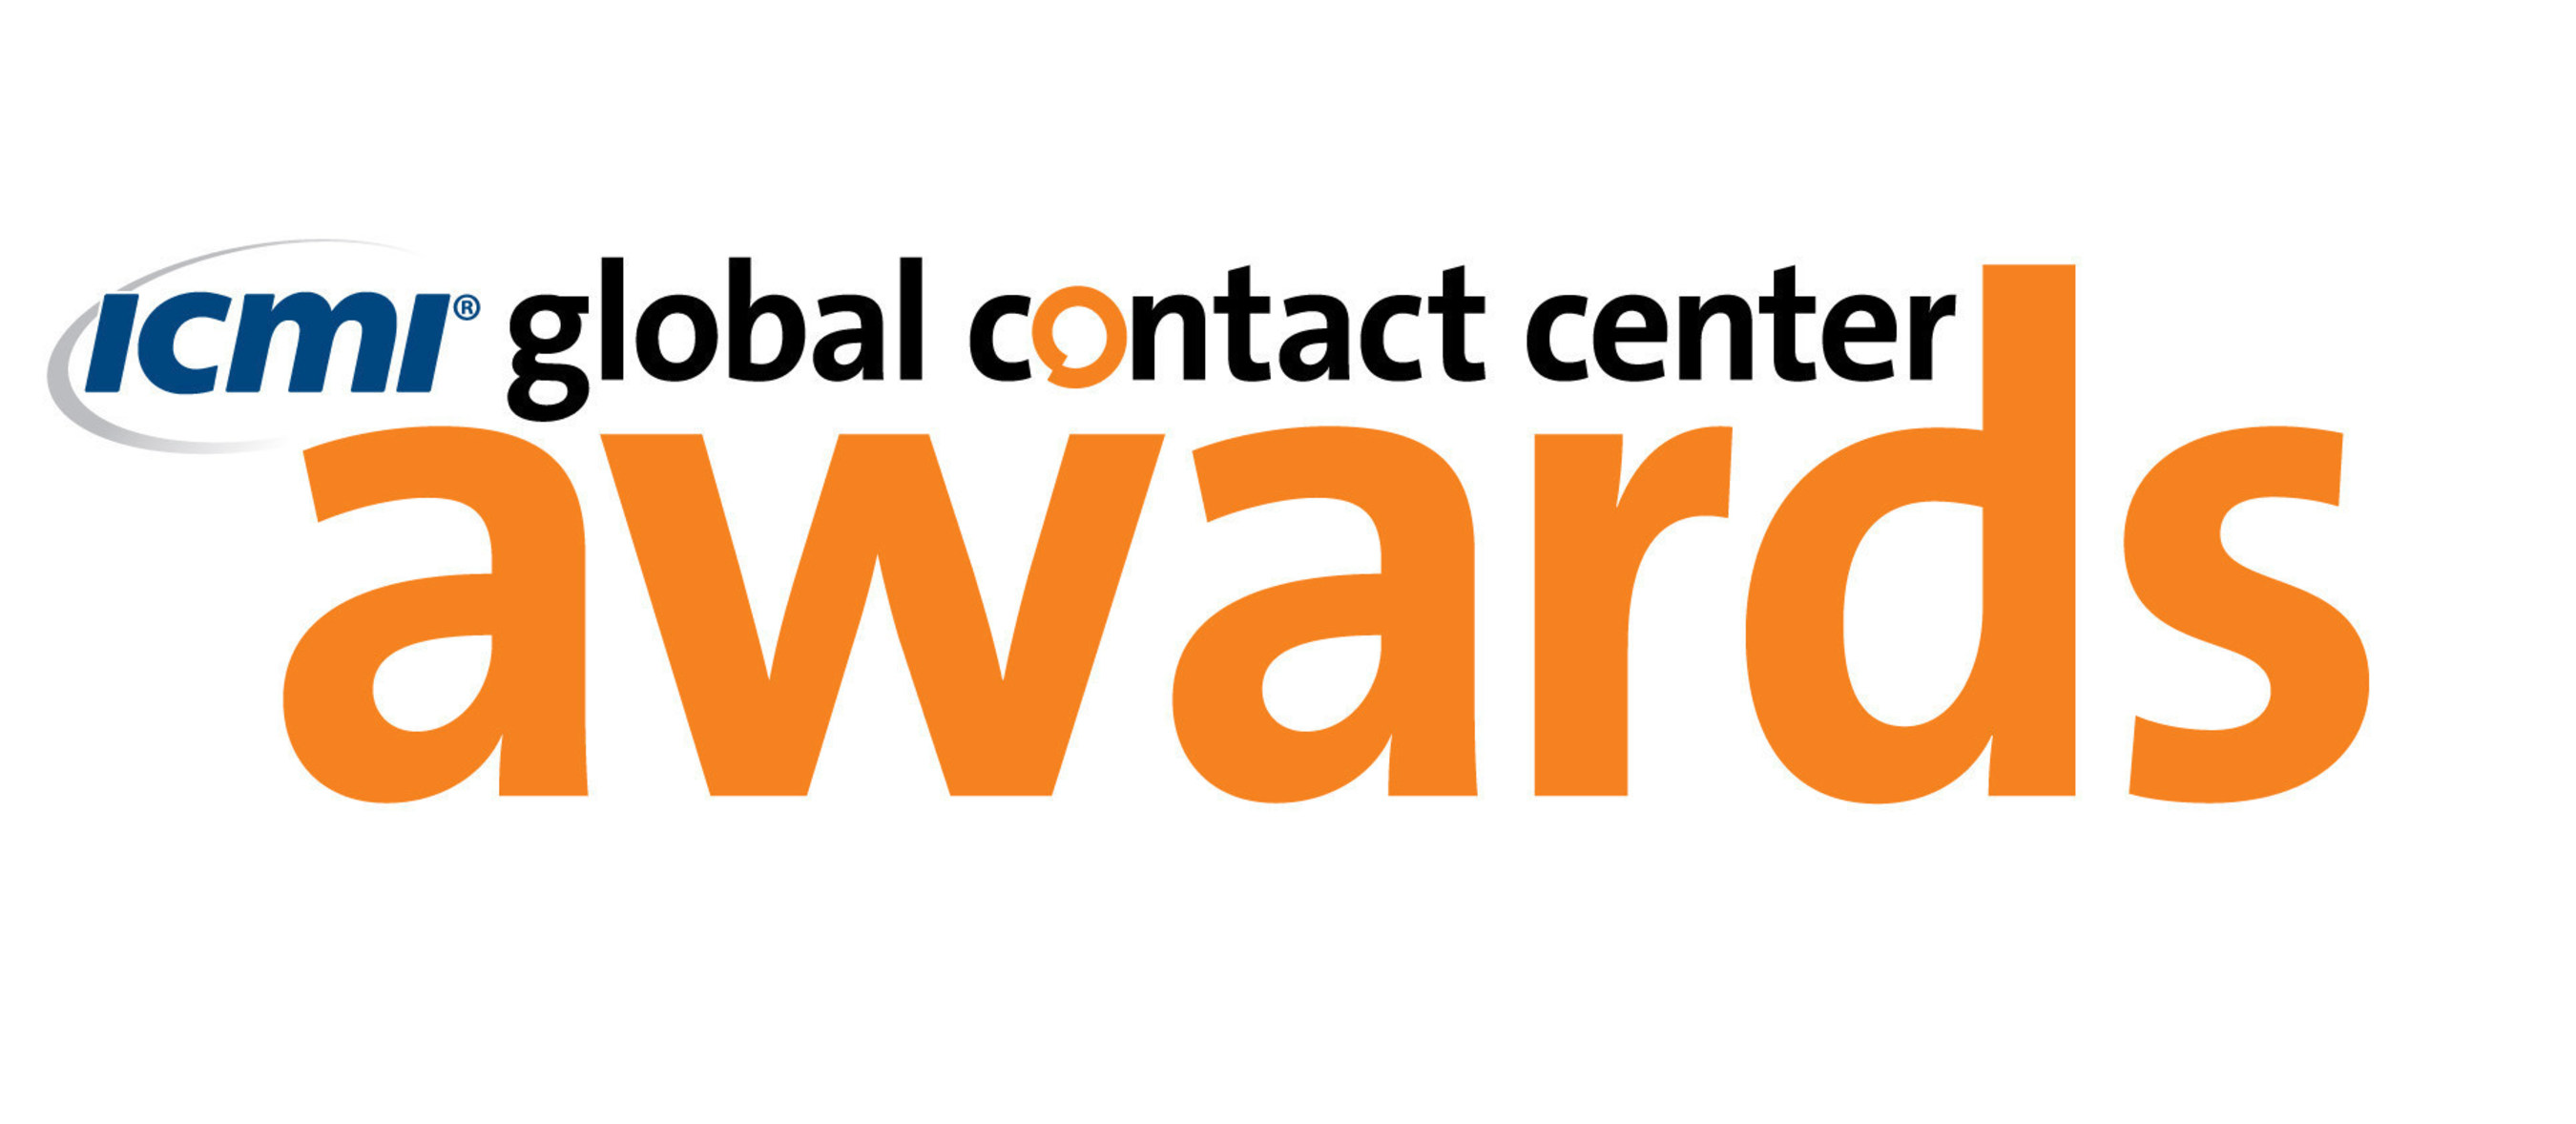 ICMI announces 2015 Global Contact Center Award winners